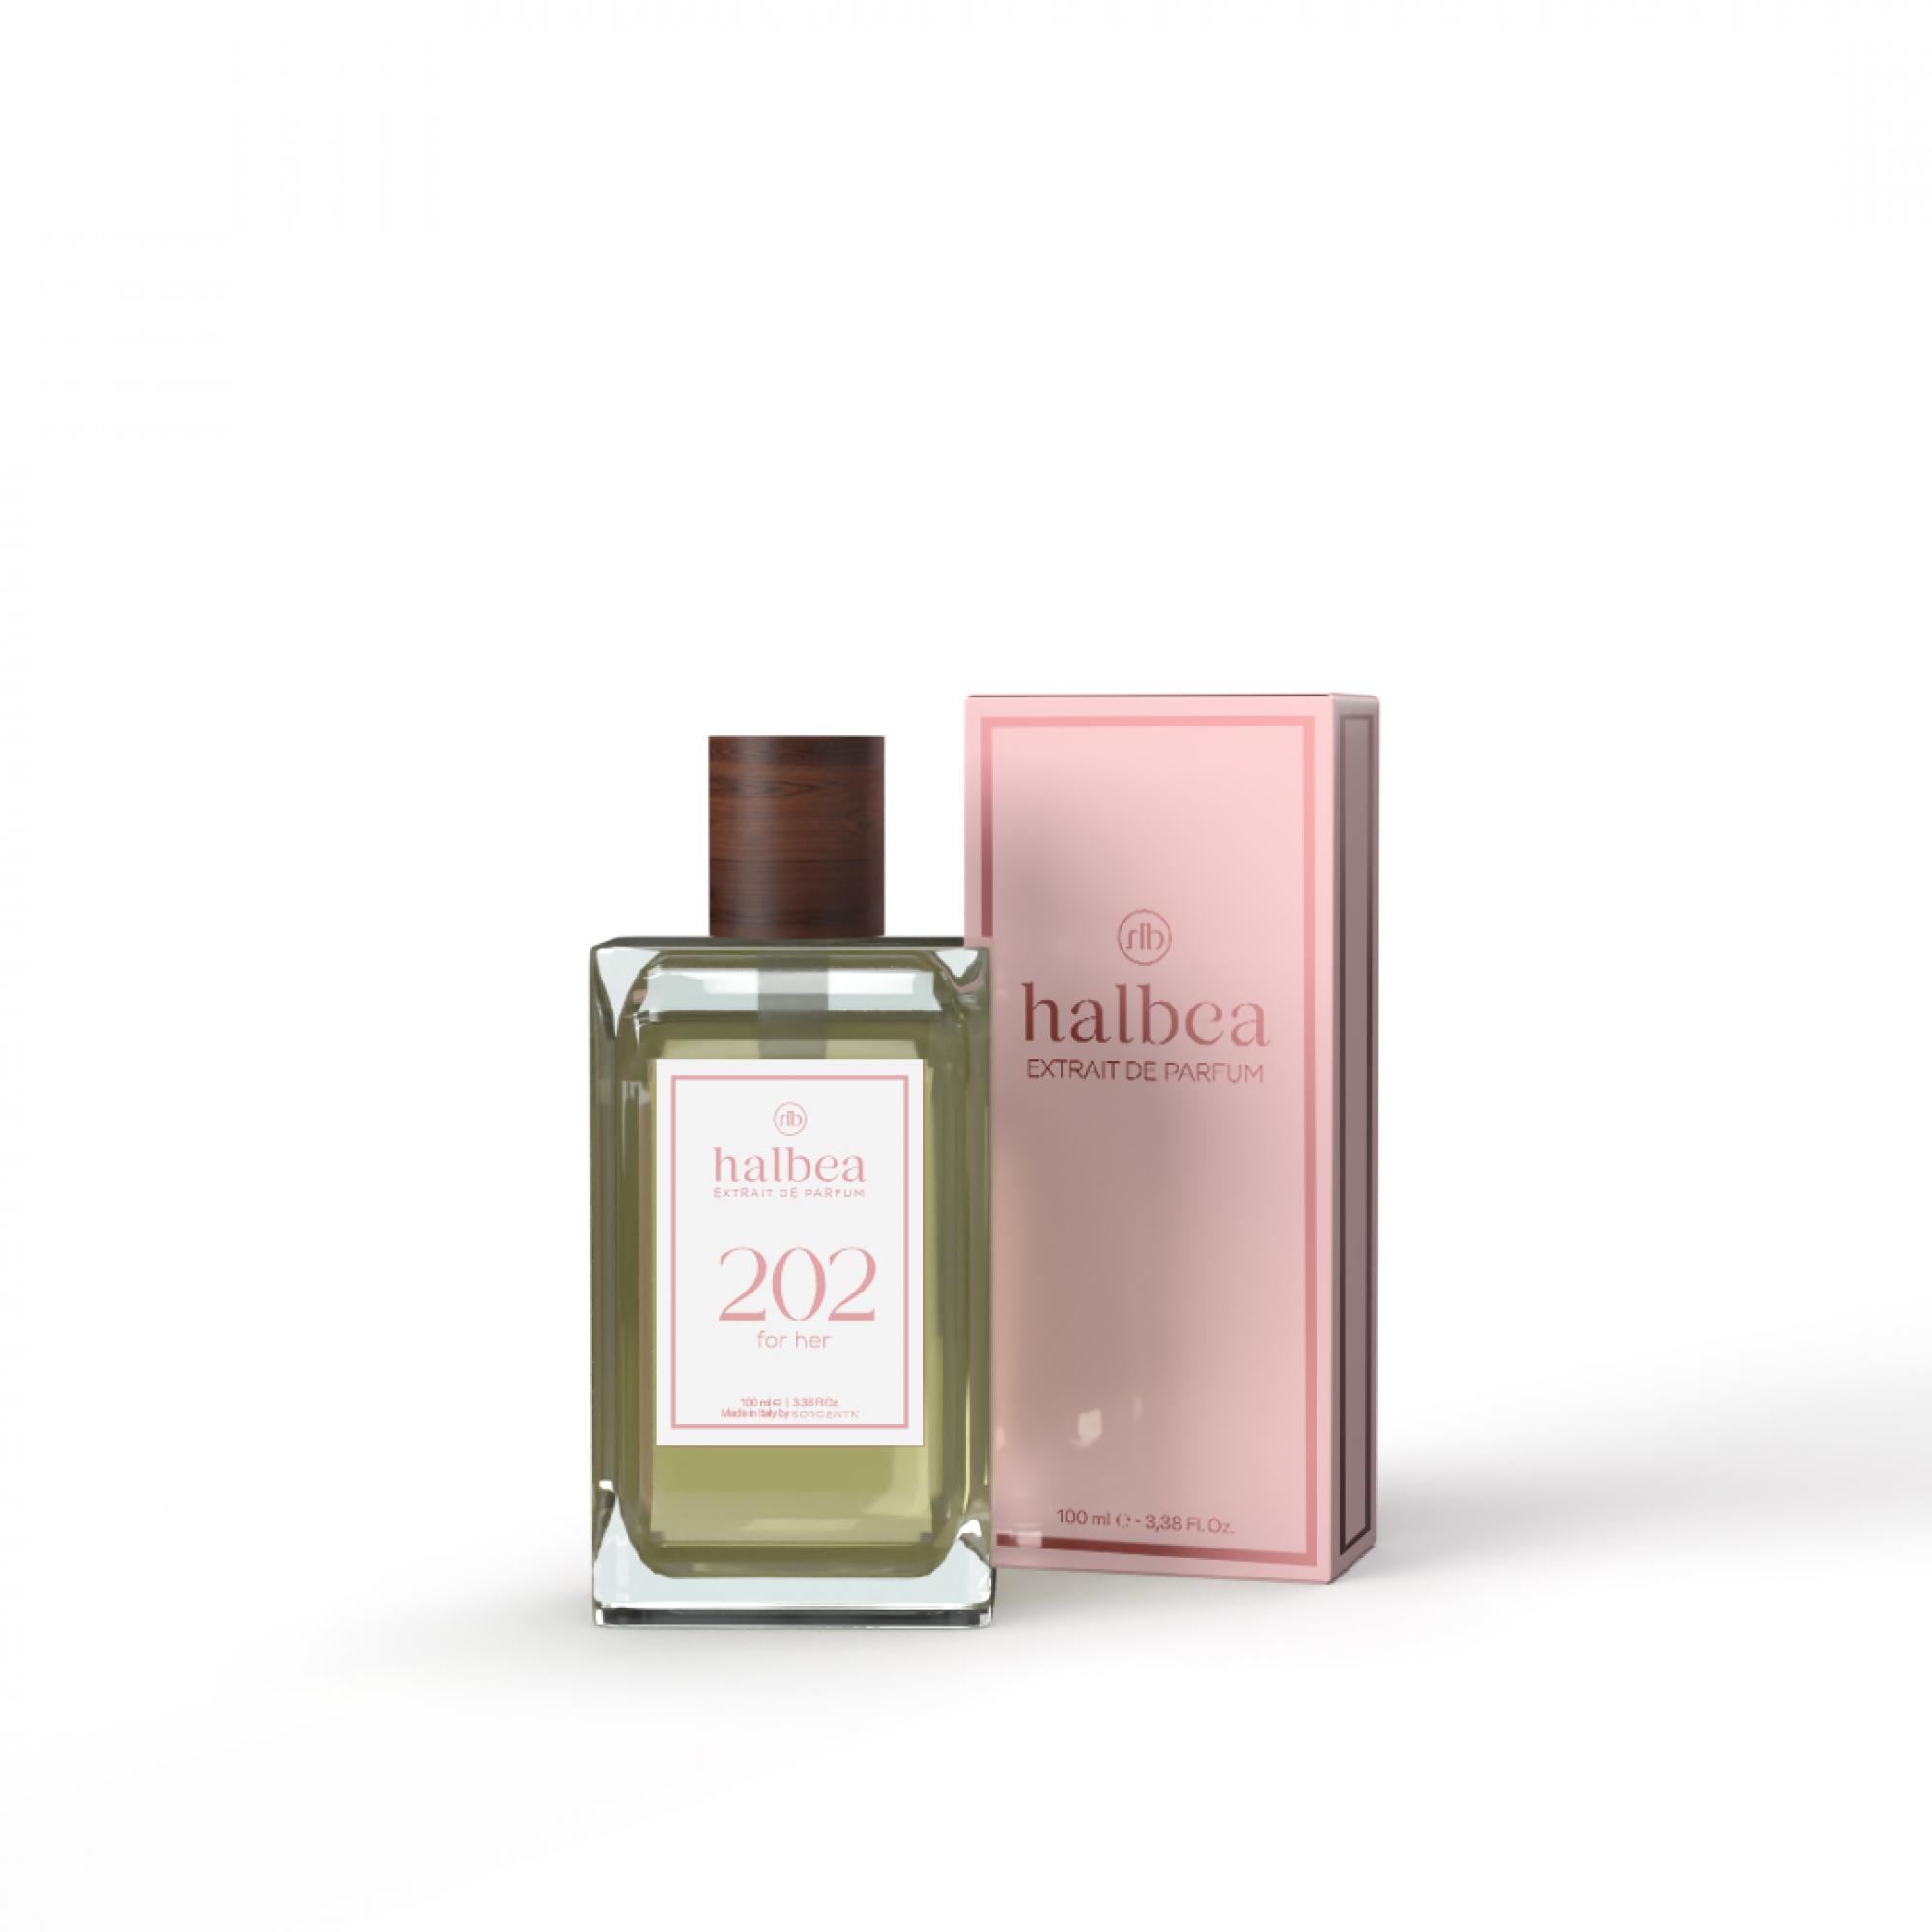 Halbea Parfum Nr. 202 insp. by Byredo Blanche Sorgenta 100ml